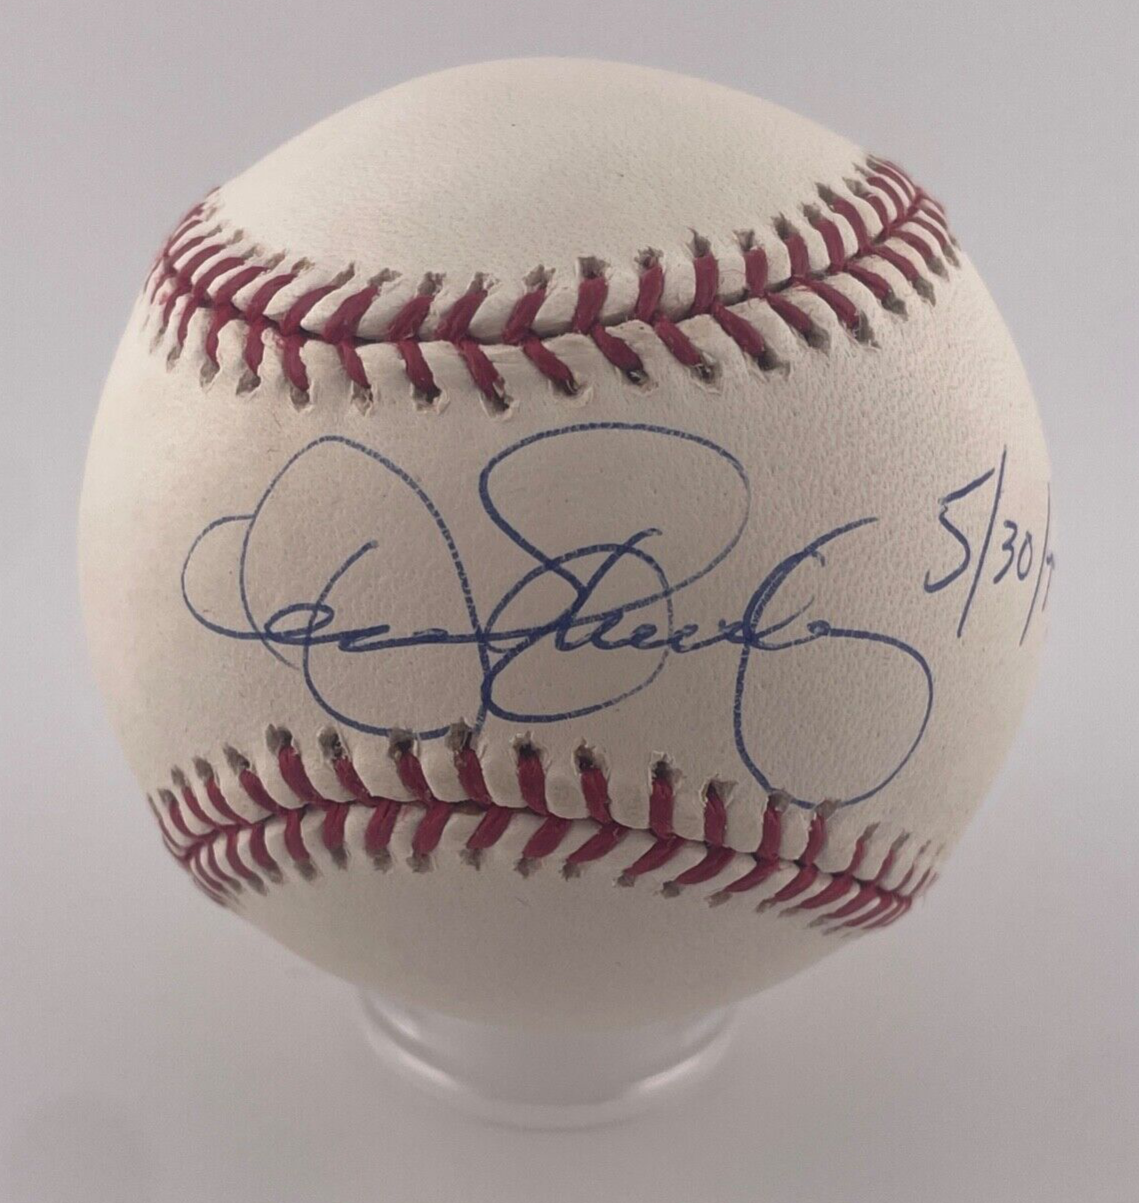 Dennis Eckersley  Signed Inscribed Baseball. &quot;5/30/77&quot;. JSA